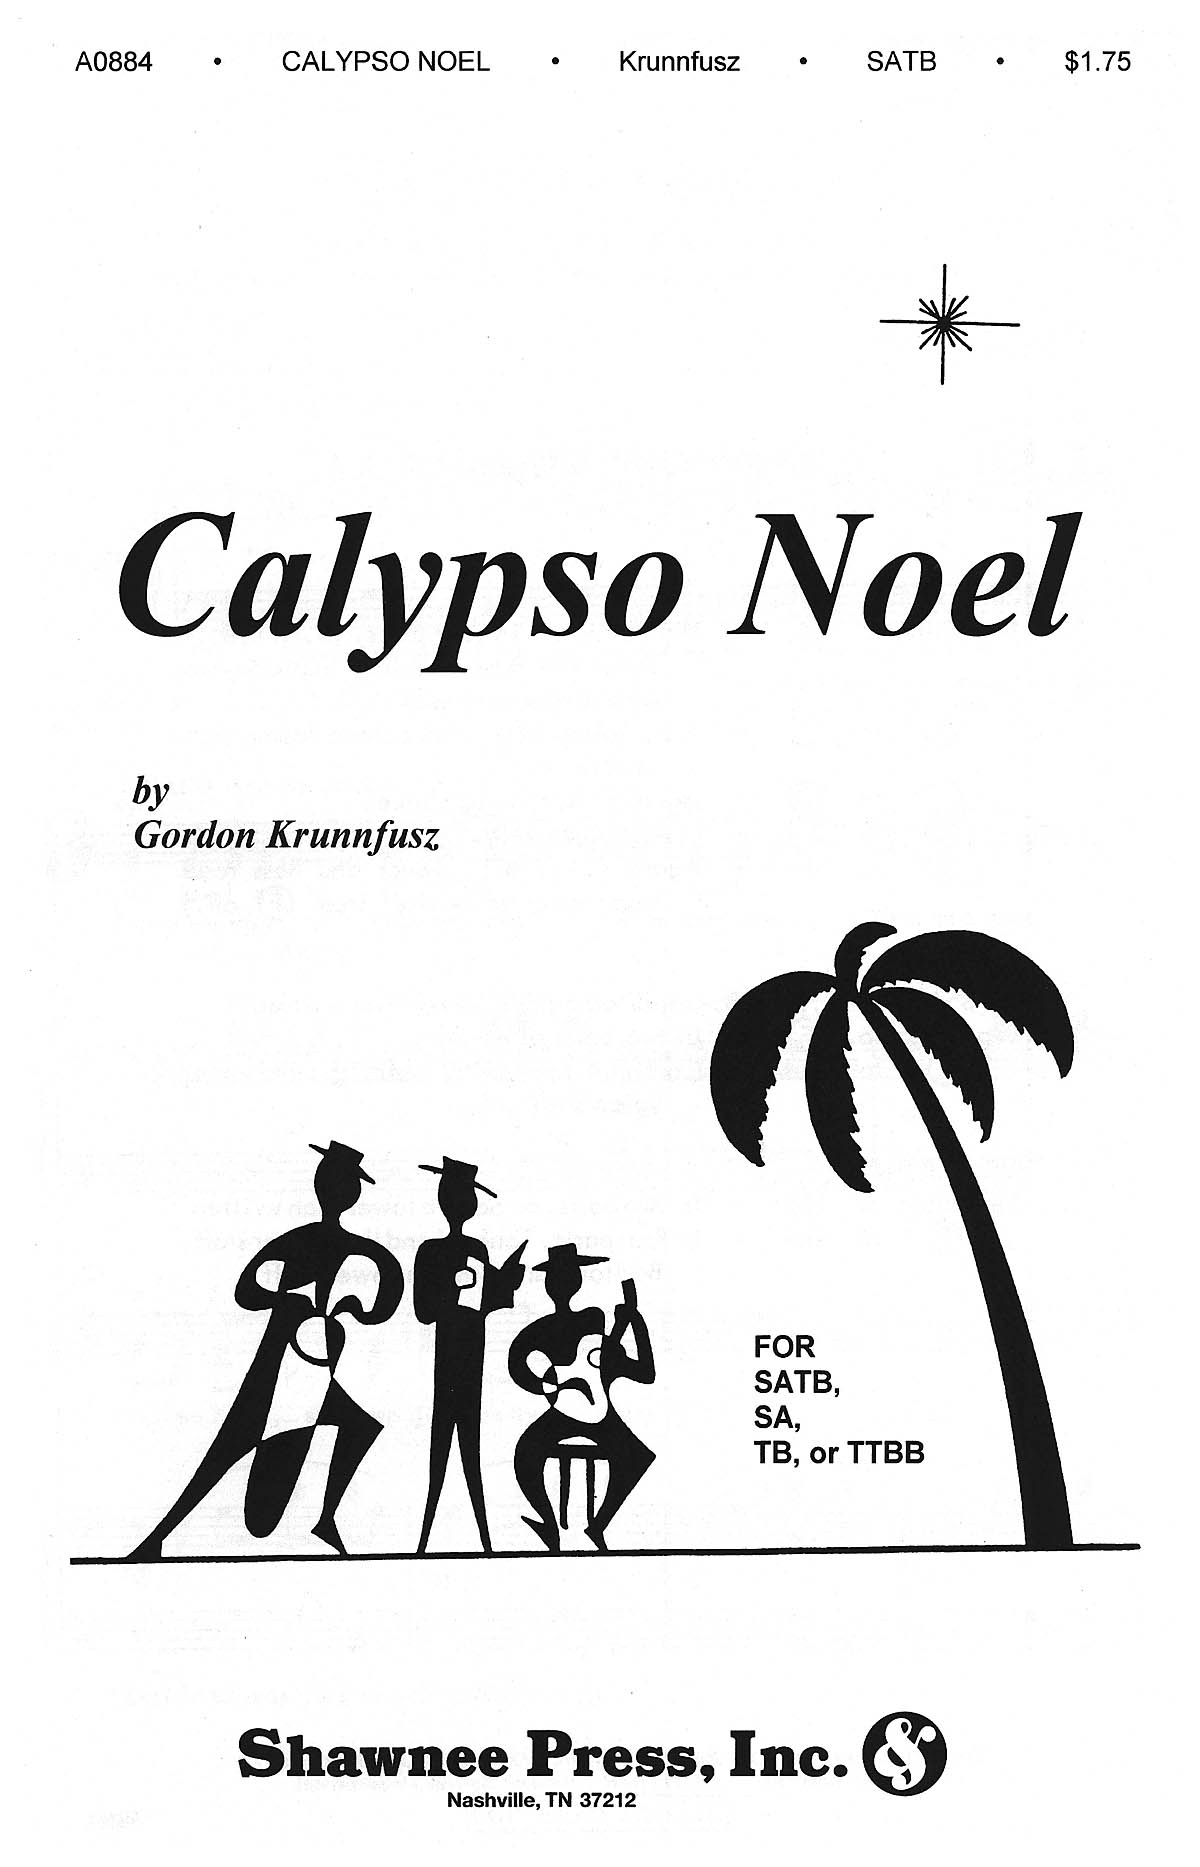 Gordon Krunnfusz: Calypso Noel: SATB: Single Sheet